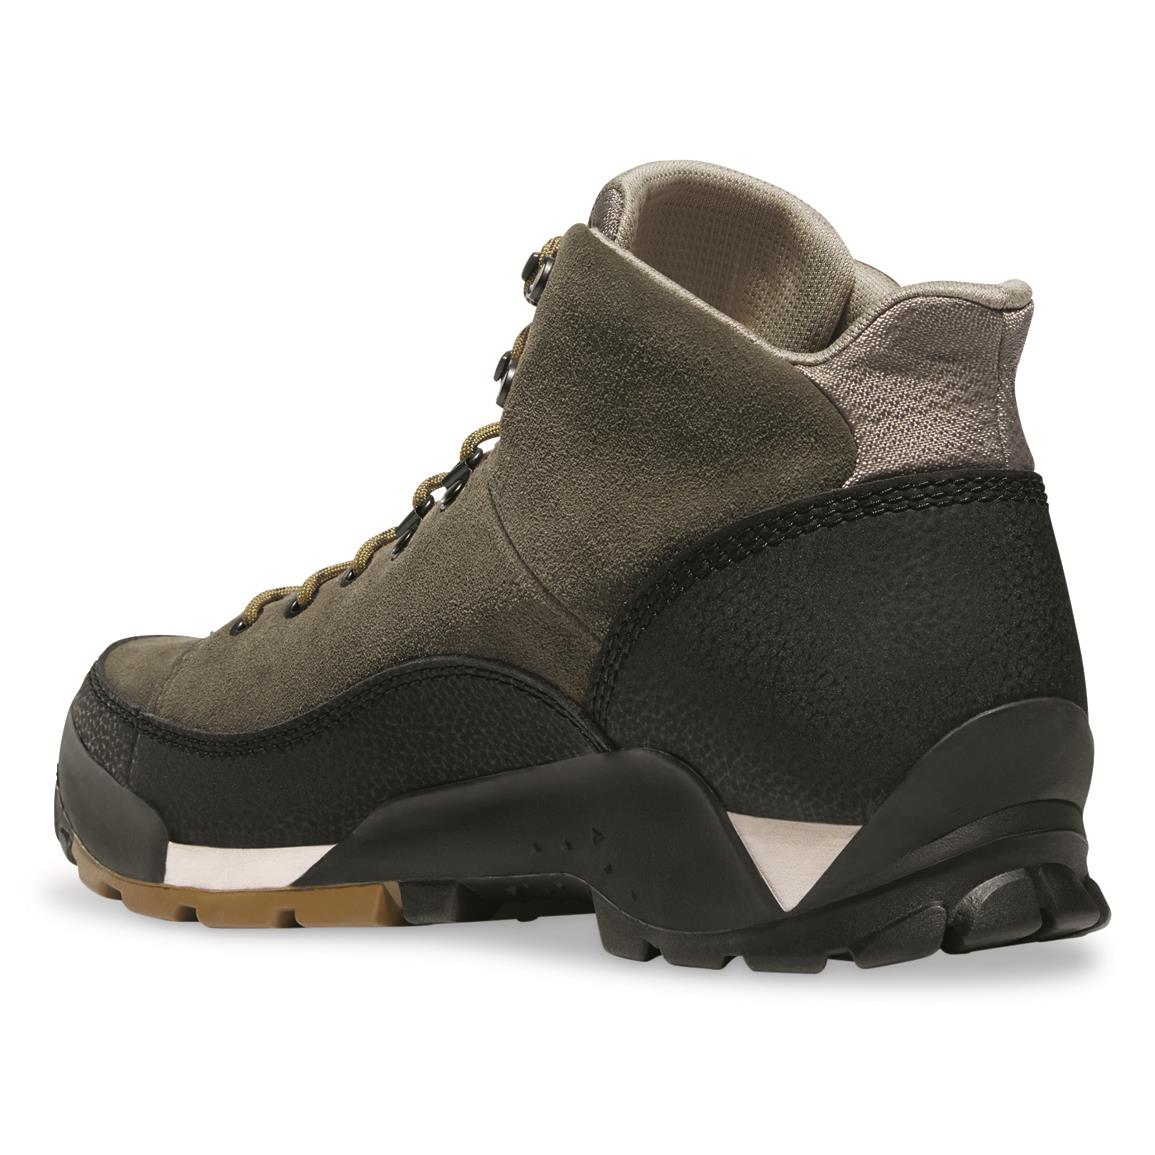 Adidas Men's Terrex Swift R3 Hiking Shoes - 730536, Hiking Boots ...